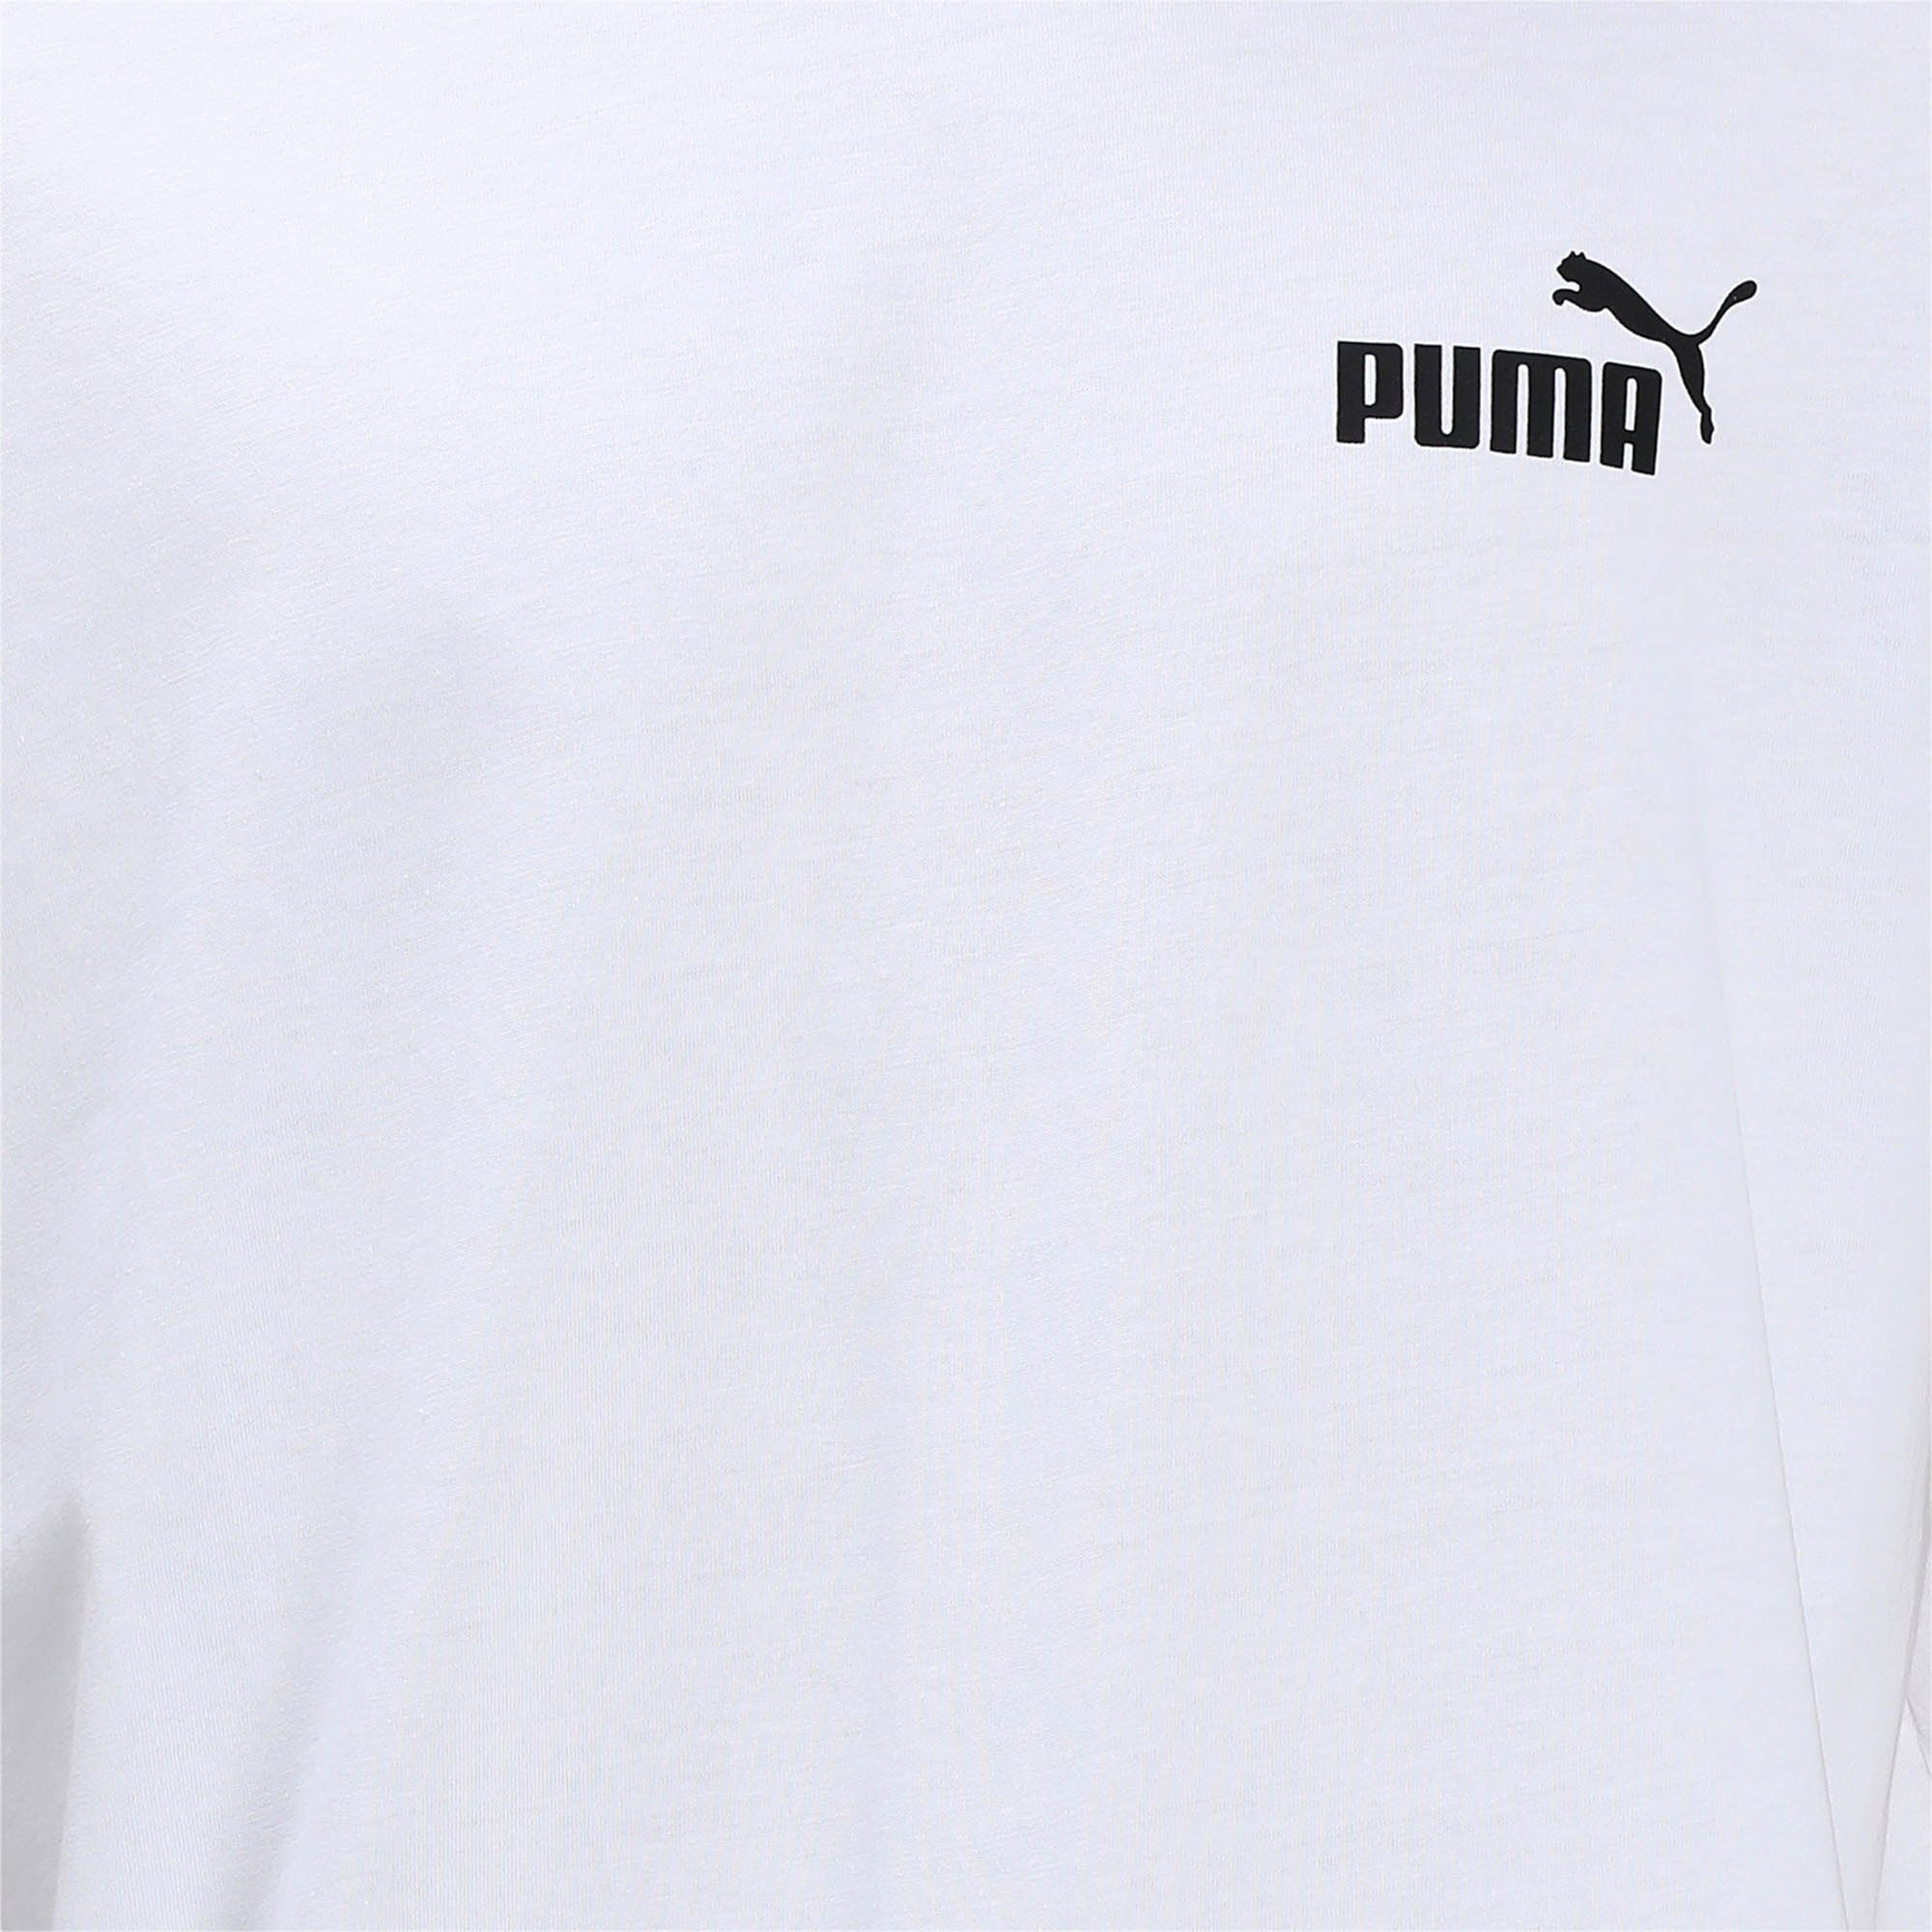 PUMA Herren Amplified Tee T-Shirt weiss 580426 02 Übergrößen - 4XL